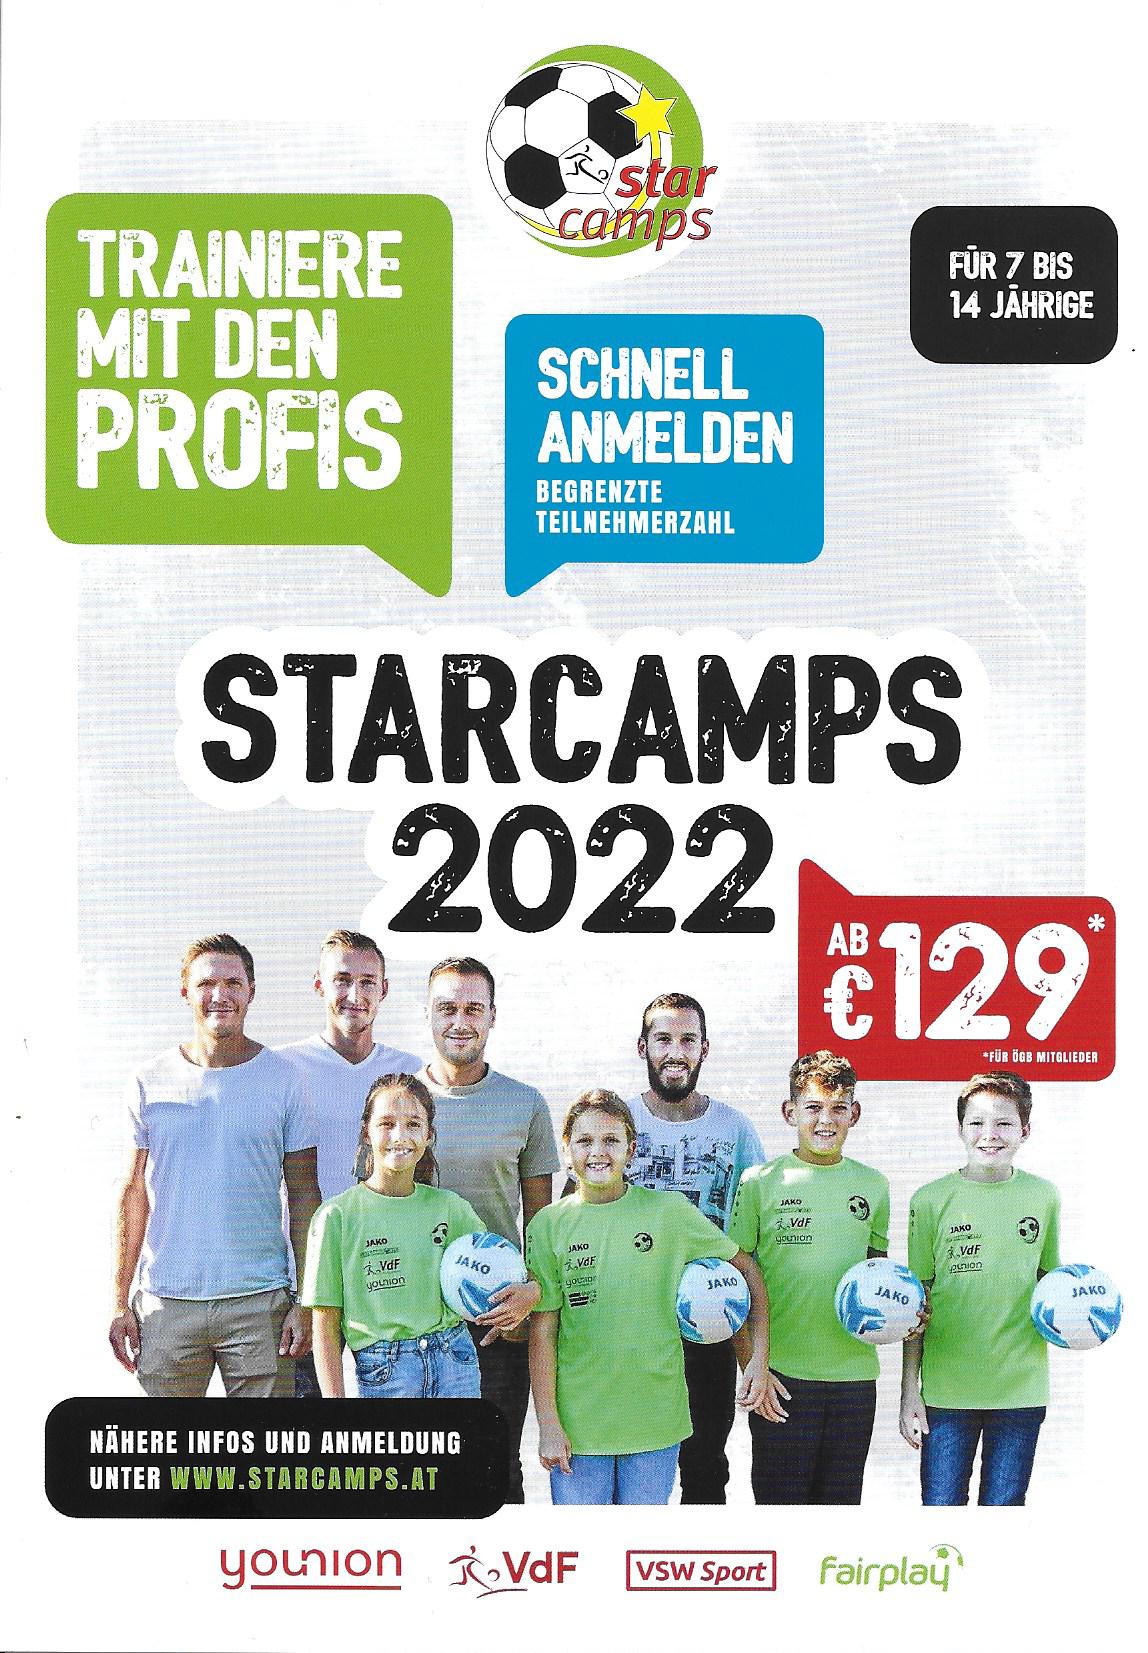 Starcamps 2022